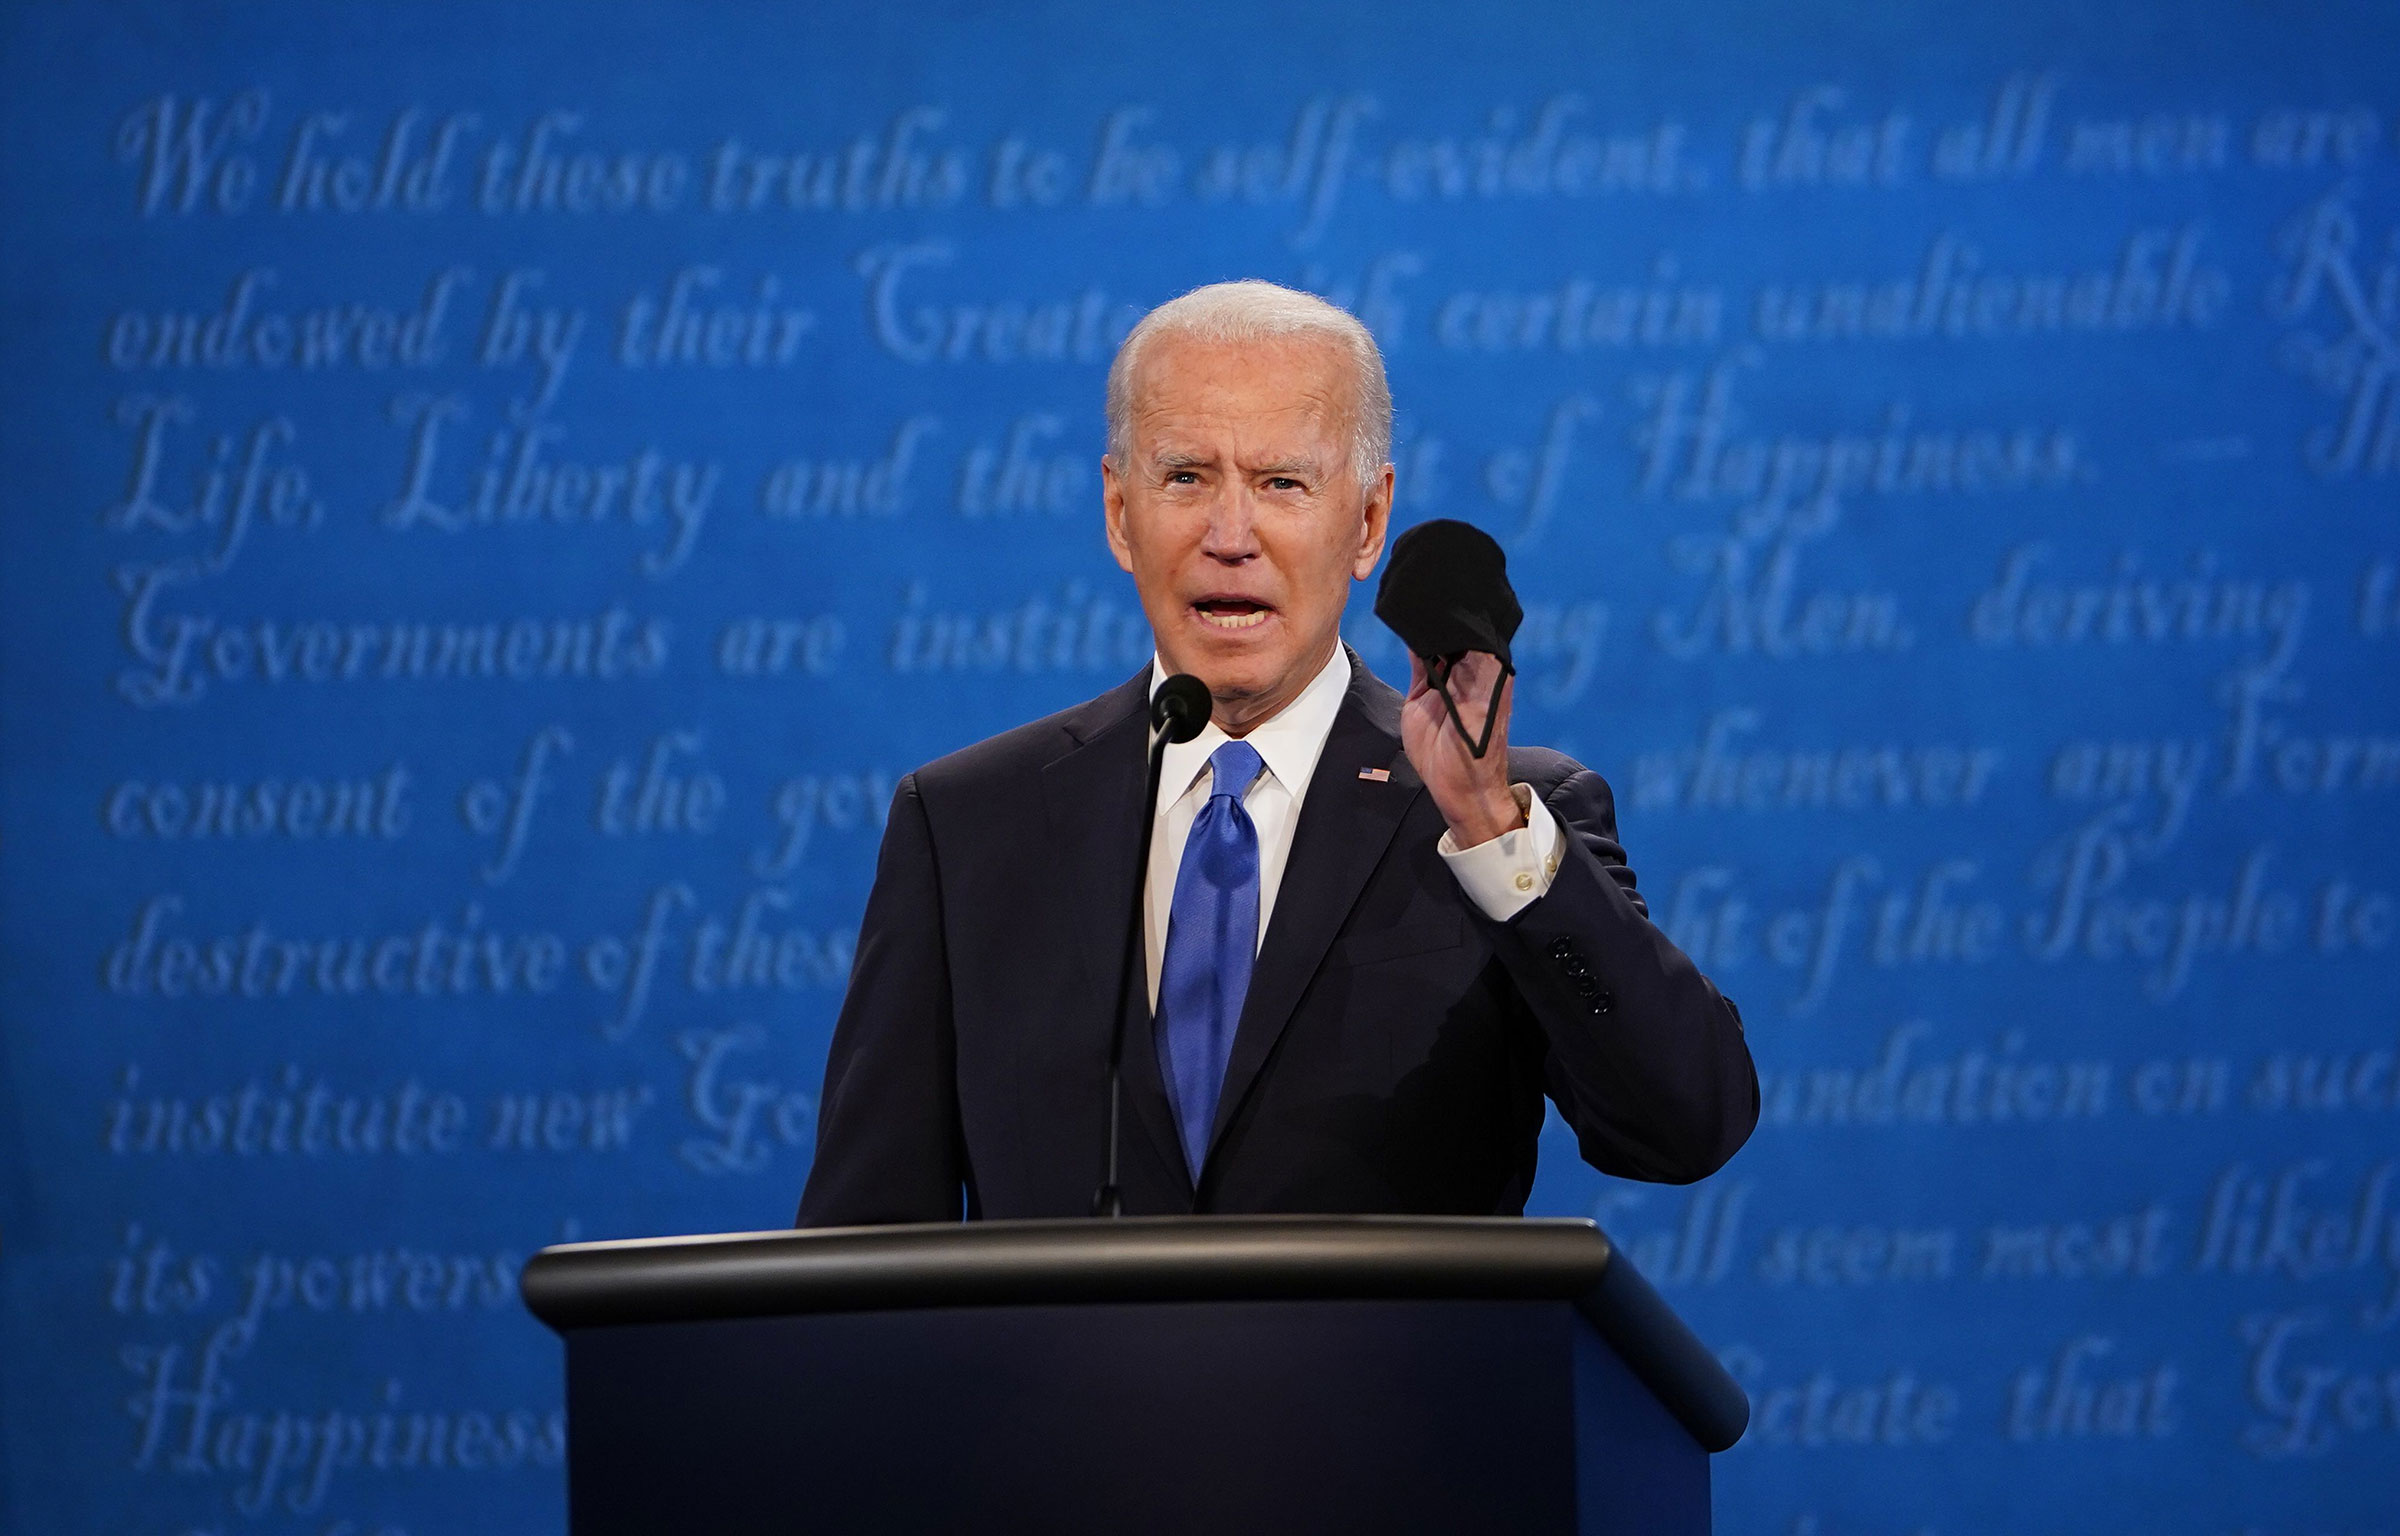 Joe Biden speaks during the final presidential debate at Belmont University in Nashville on Oct. 22, 2020